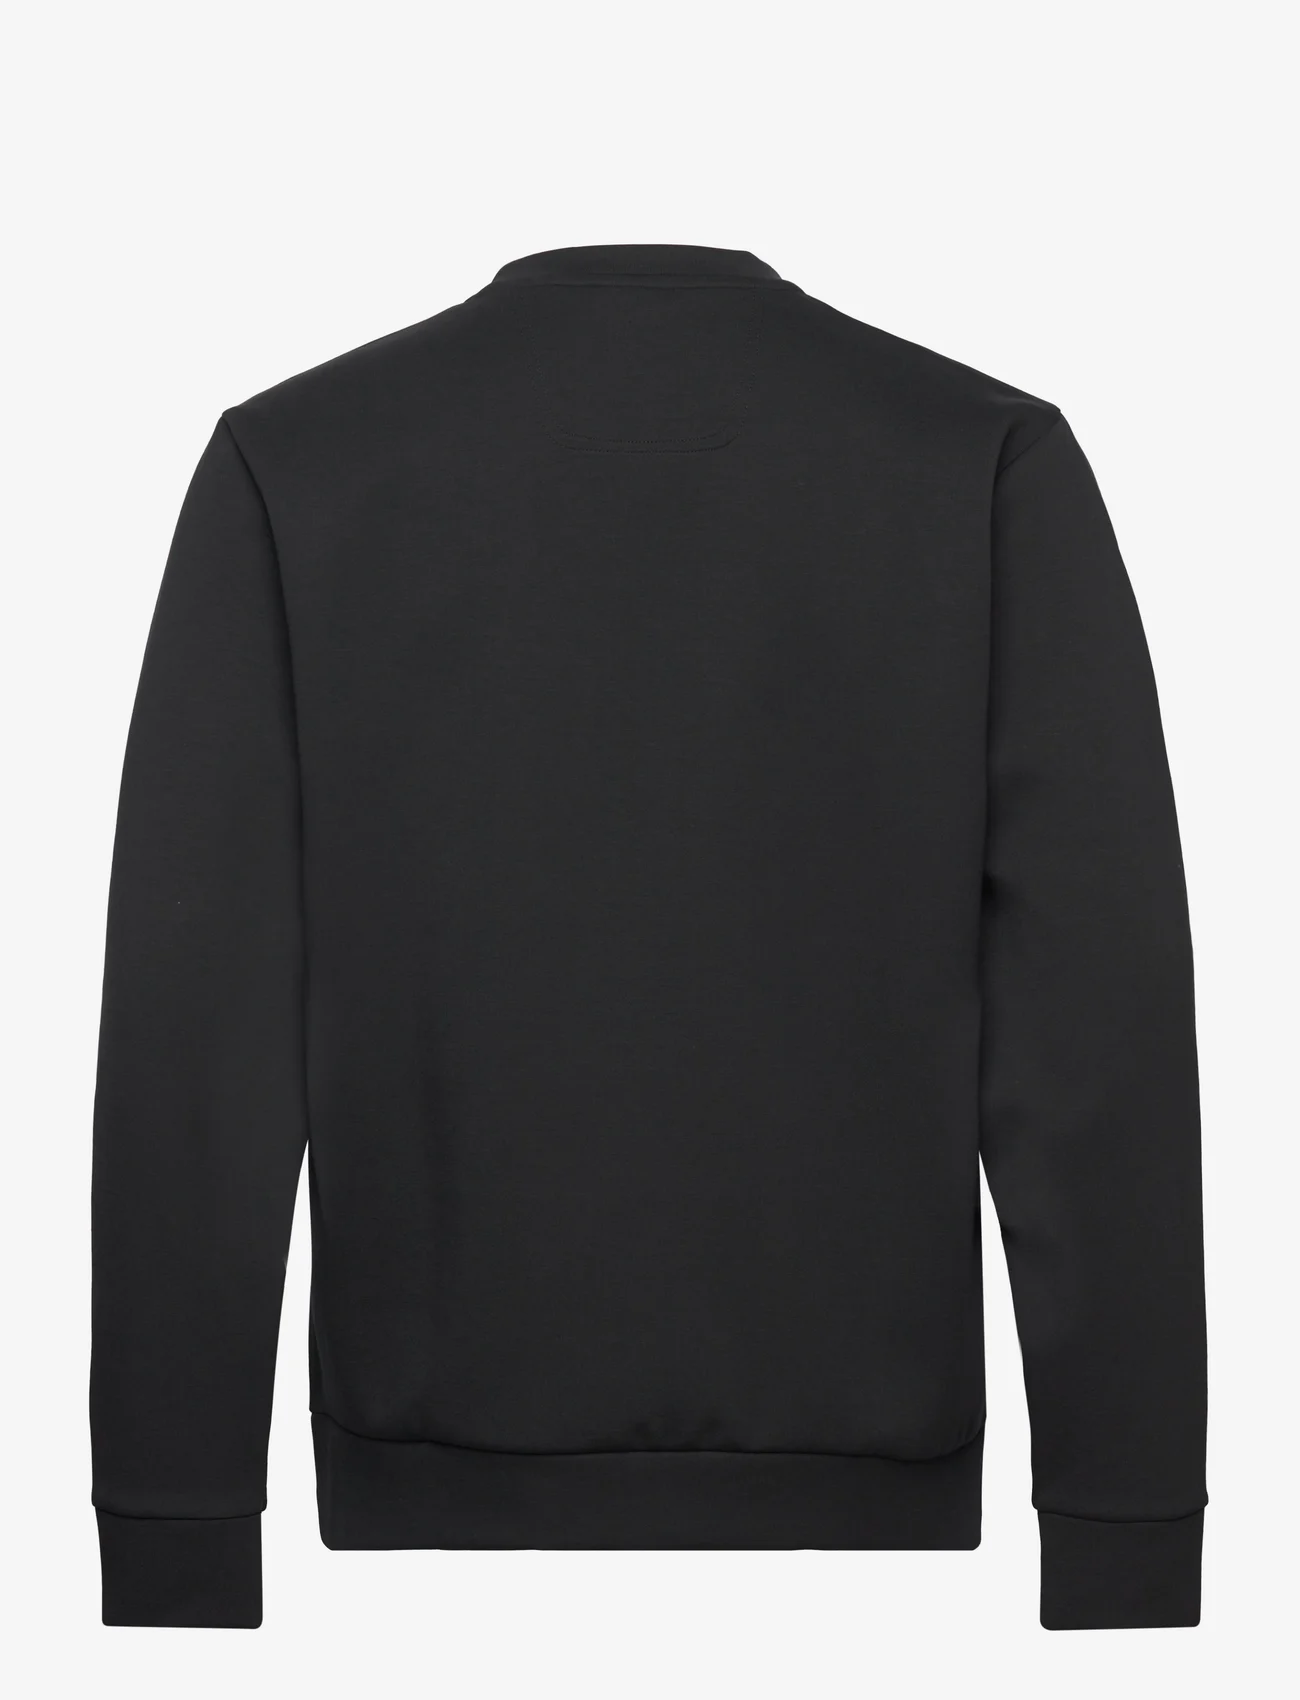 BOSS - Salbo 1 - sweaters - black - 1